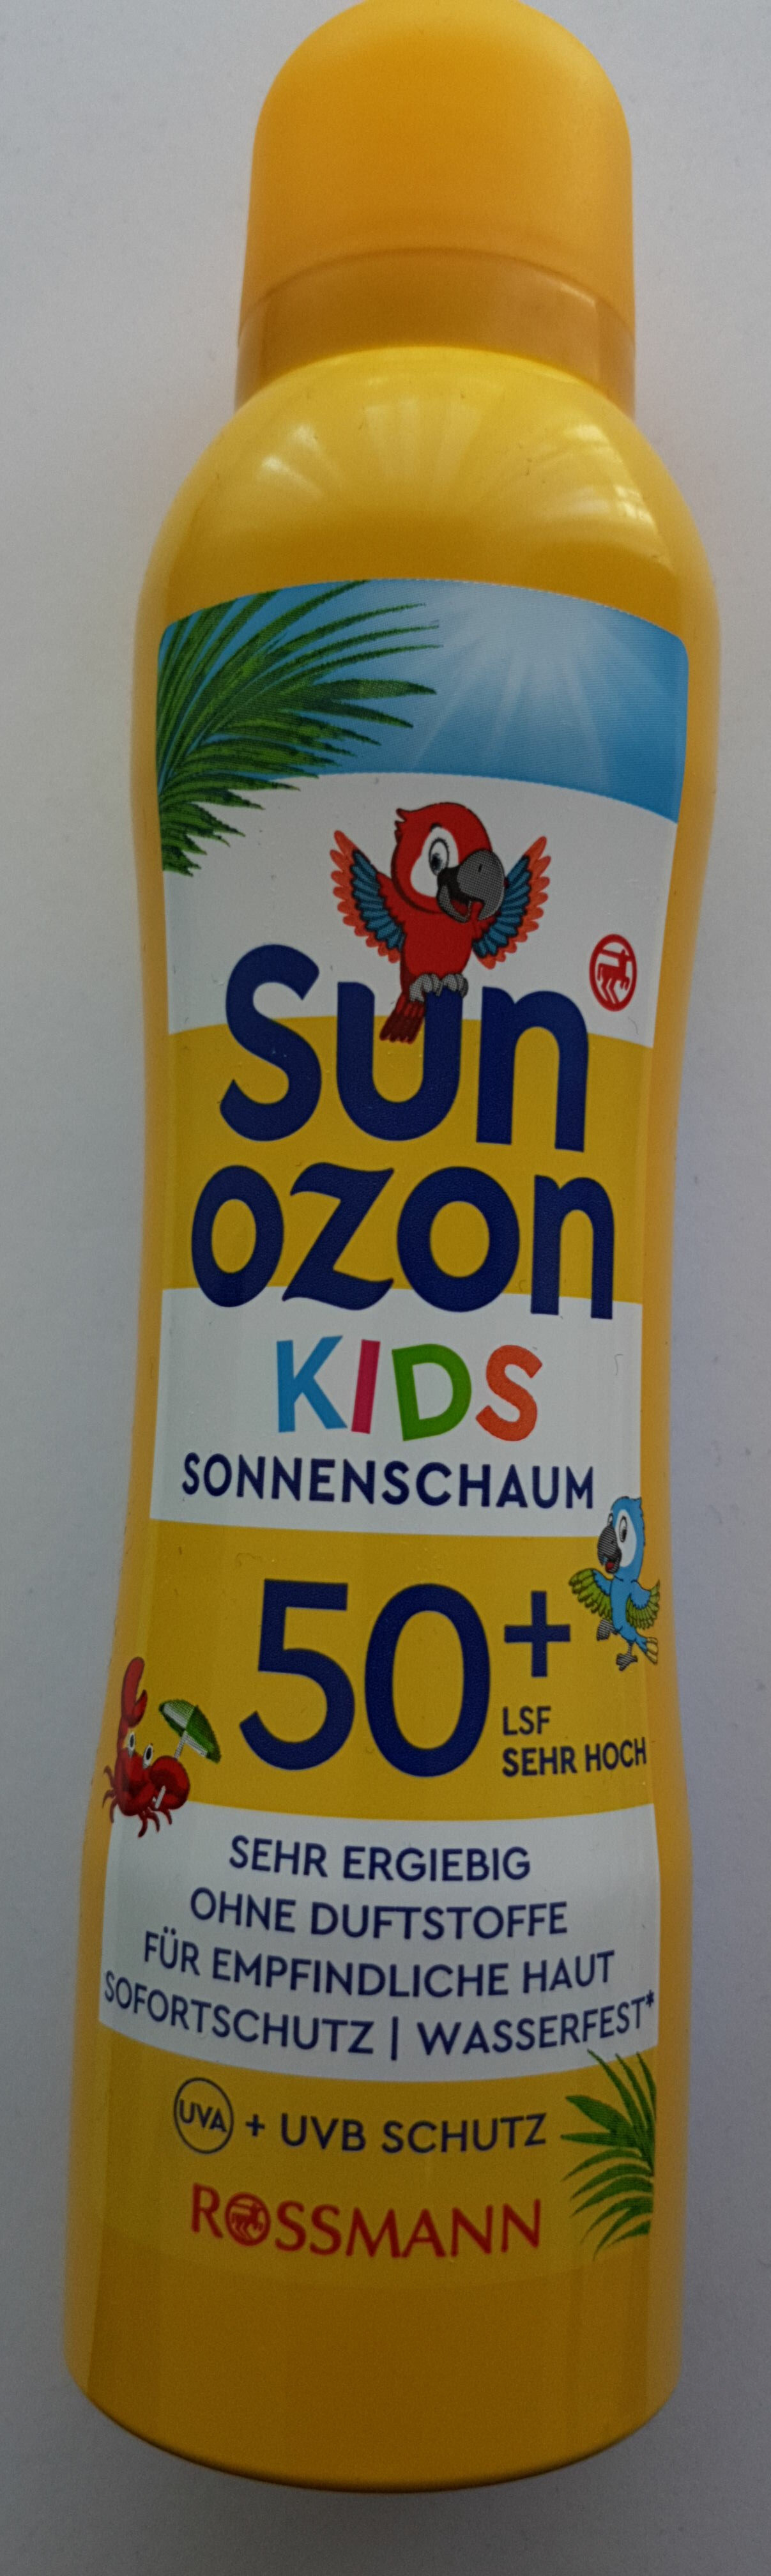 Sun ozon kids - Produit - de